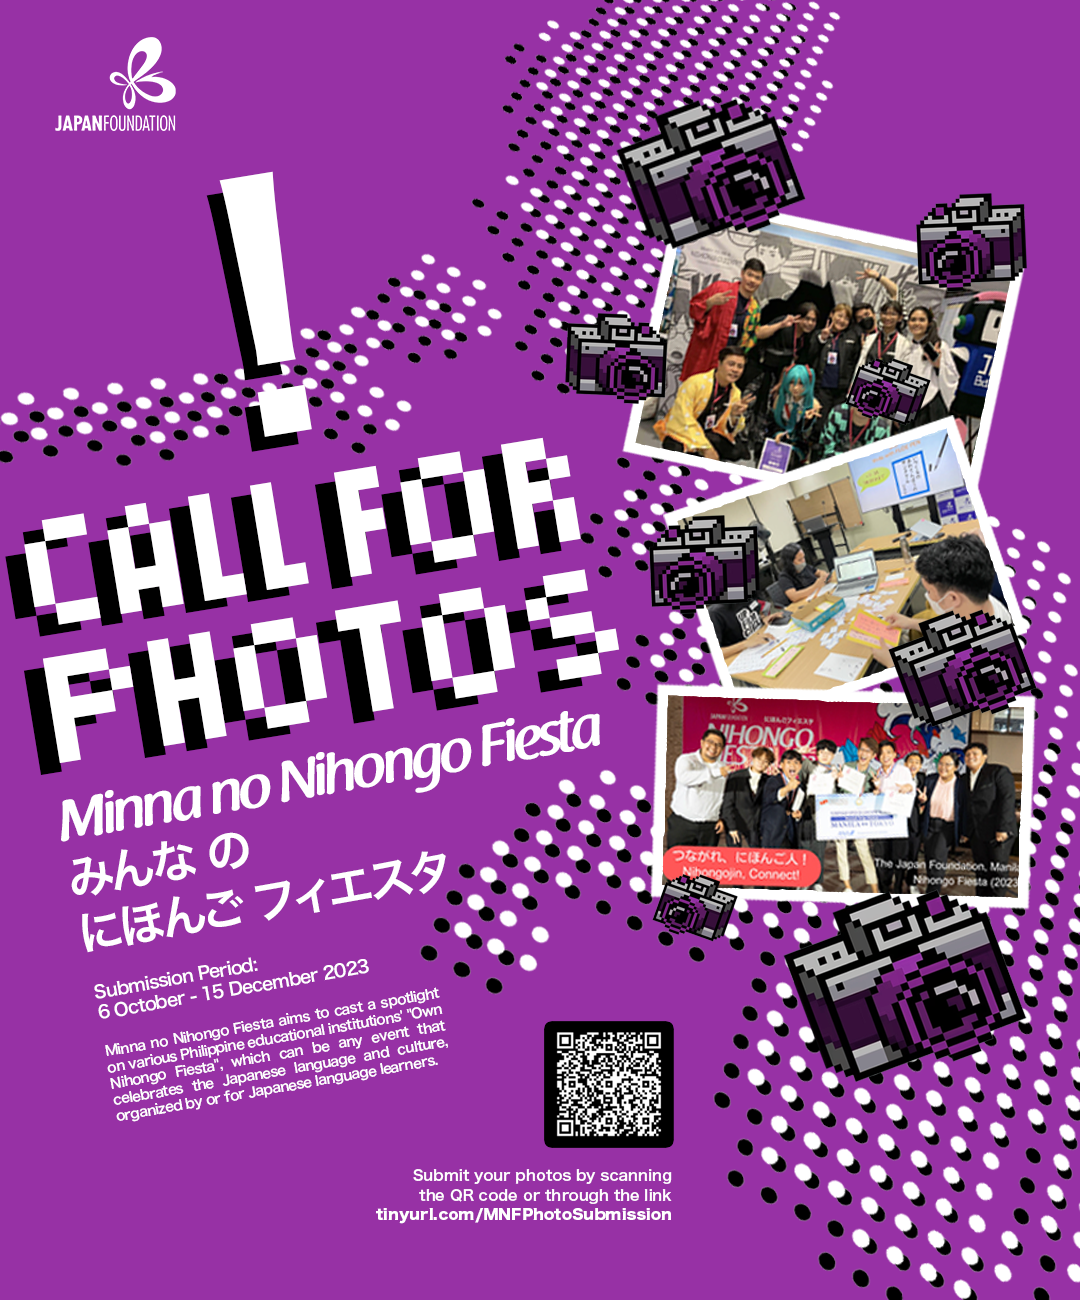 Call for Photos: Minna no Nihongo Fiesta